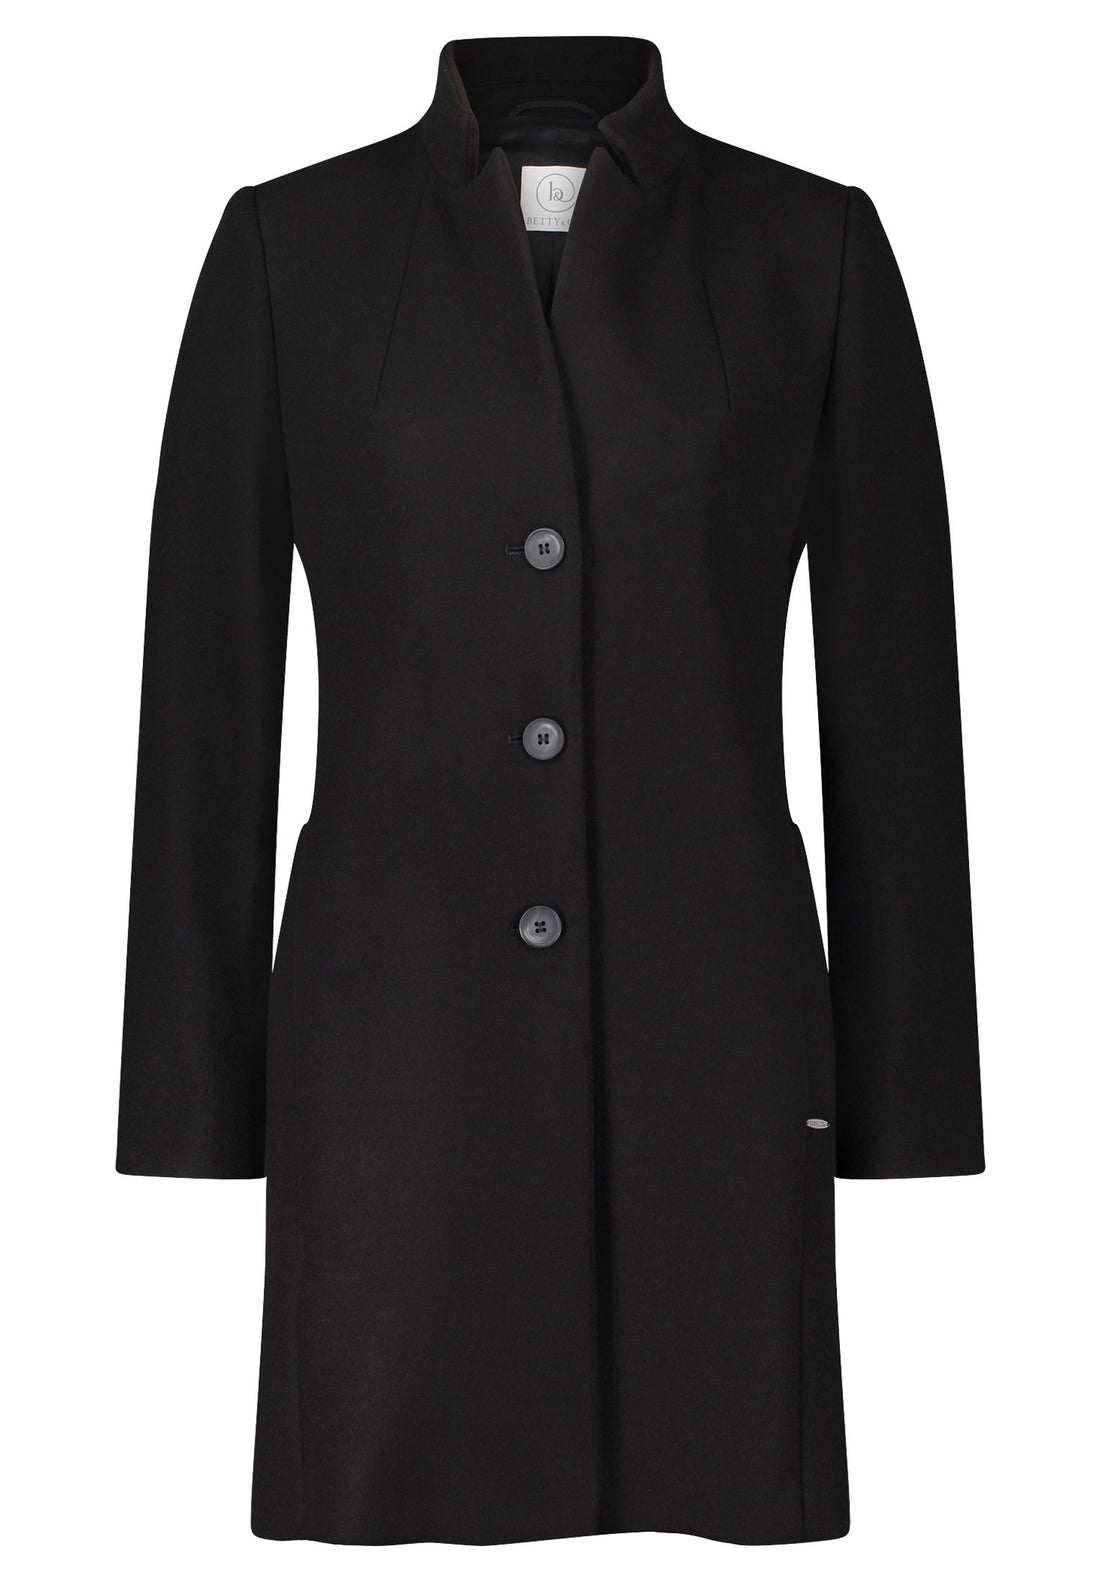 Black Blazer Style Coat_4298-3742_9045_01